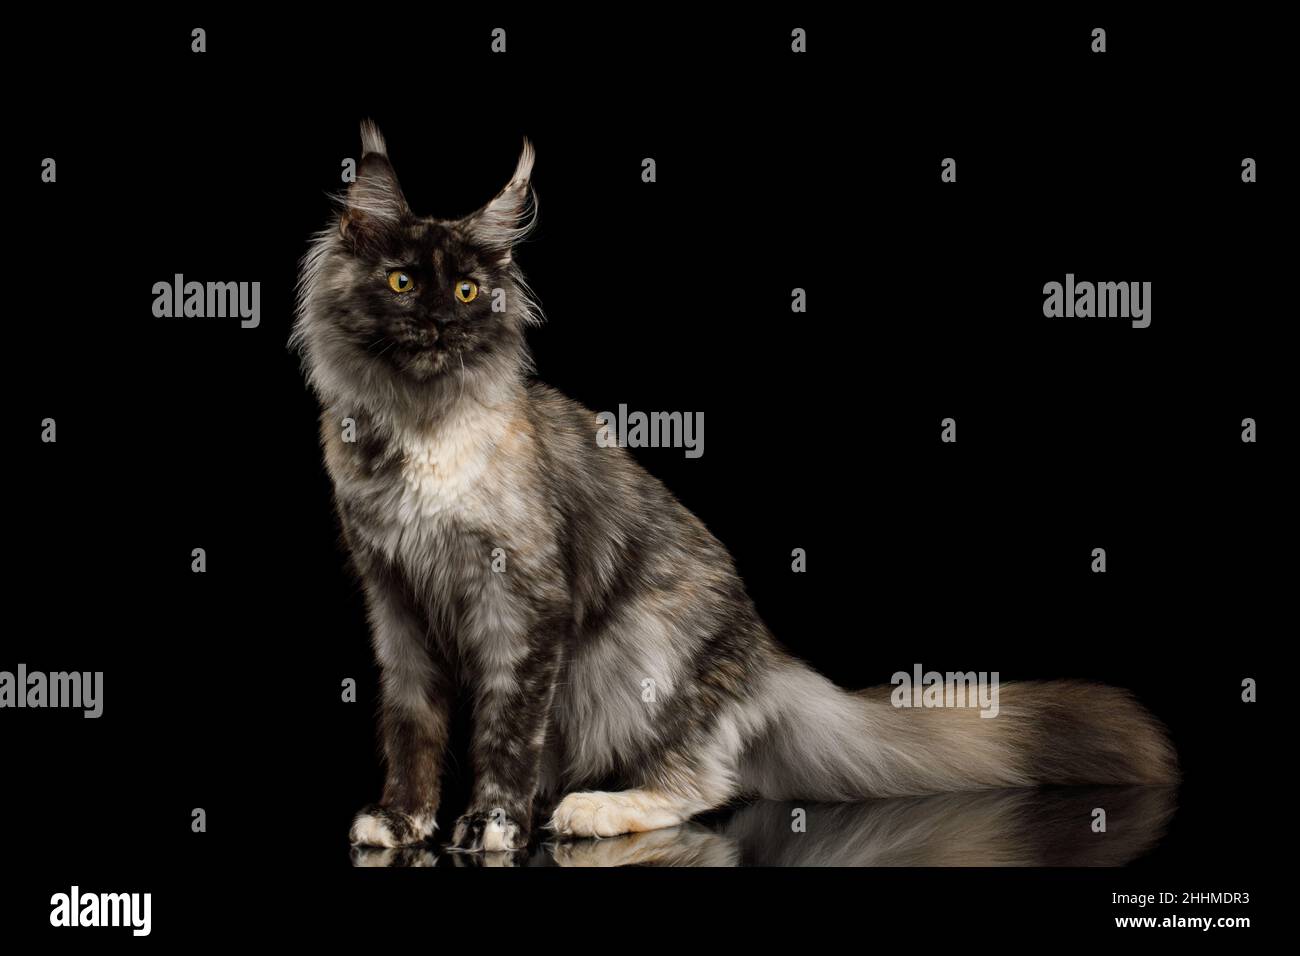 Juguetón gato montés de maine con divertida vista lateral de la cara sobre fondo negro aislado Foto de stock